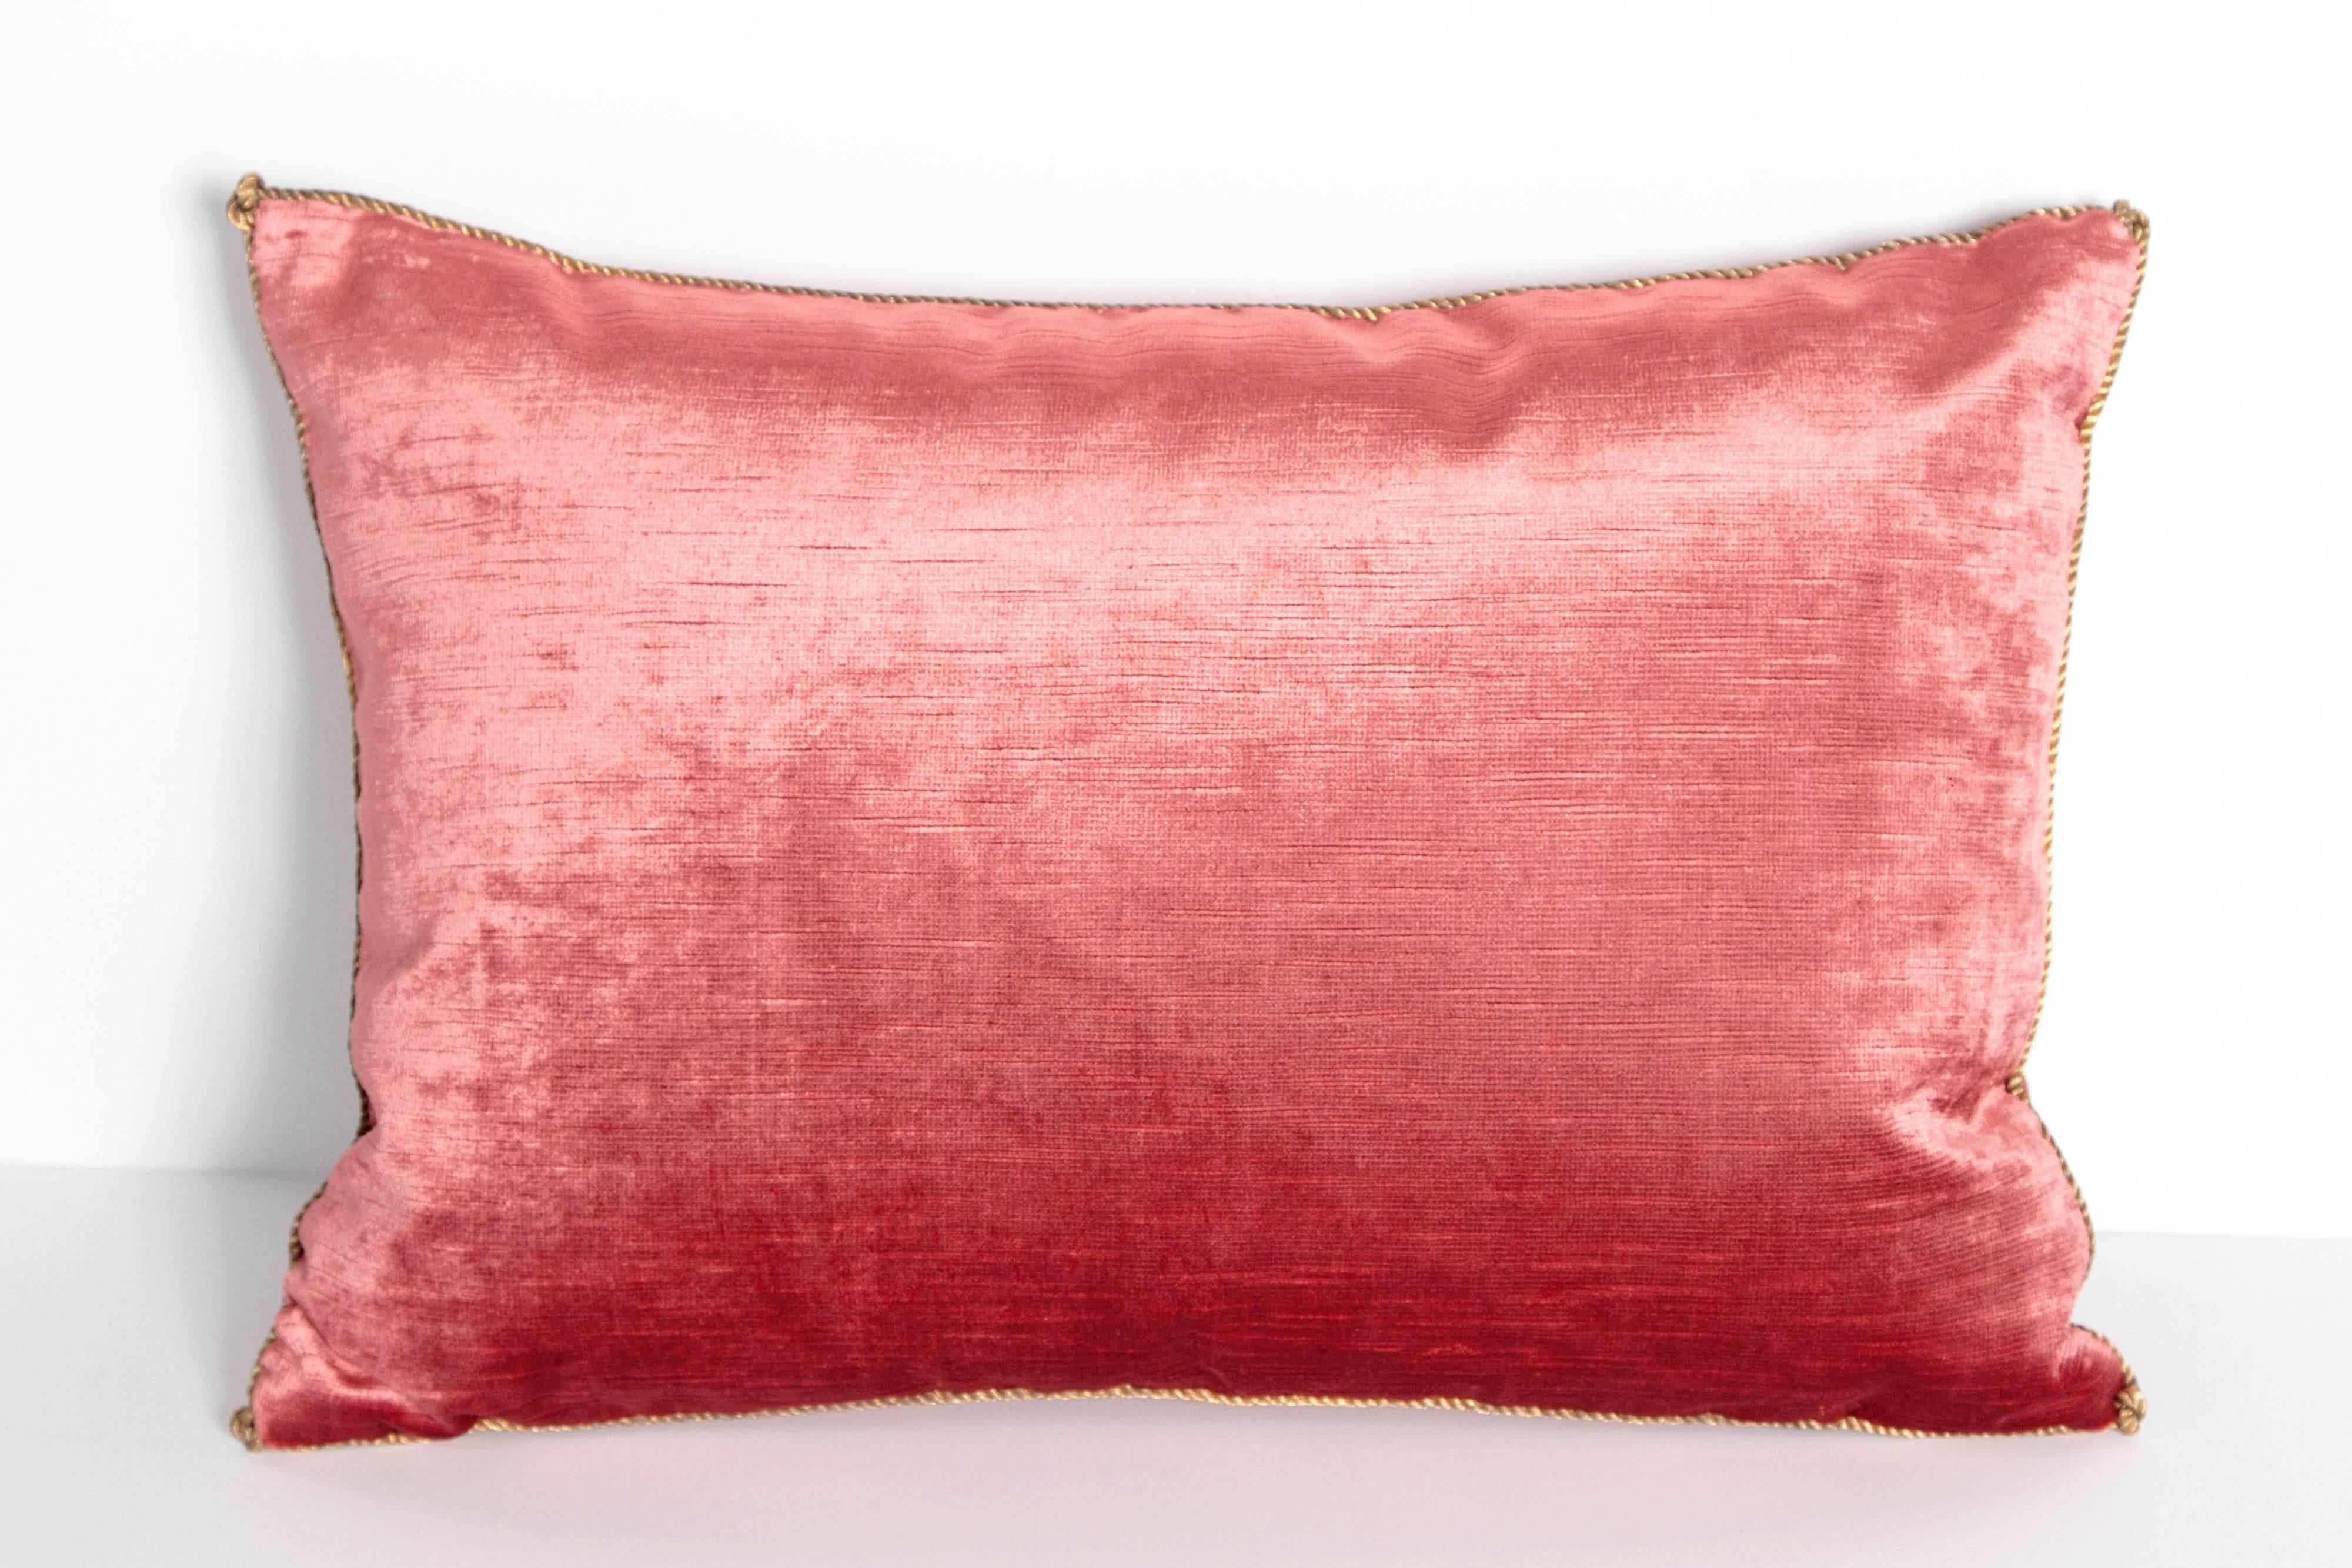 Embroidered Antique Textile Pillow by Rebecca Vizard of B. Viz Design